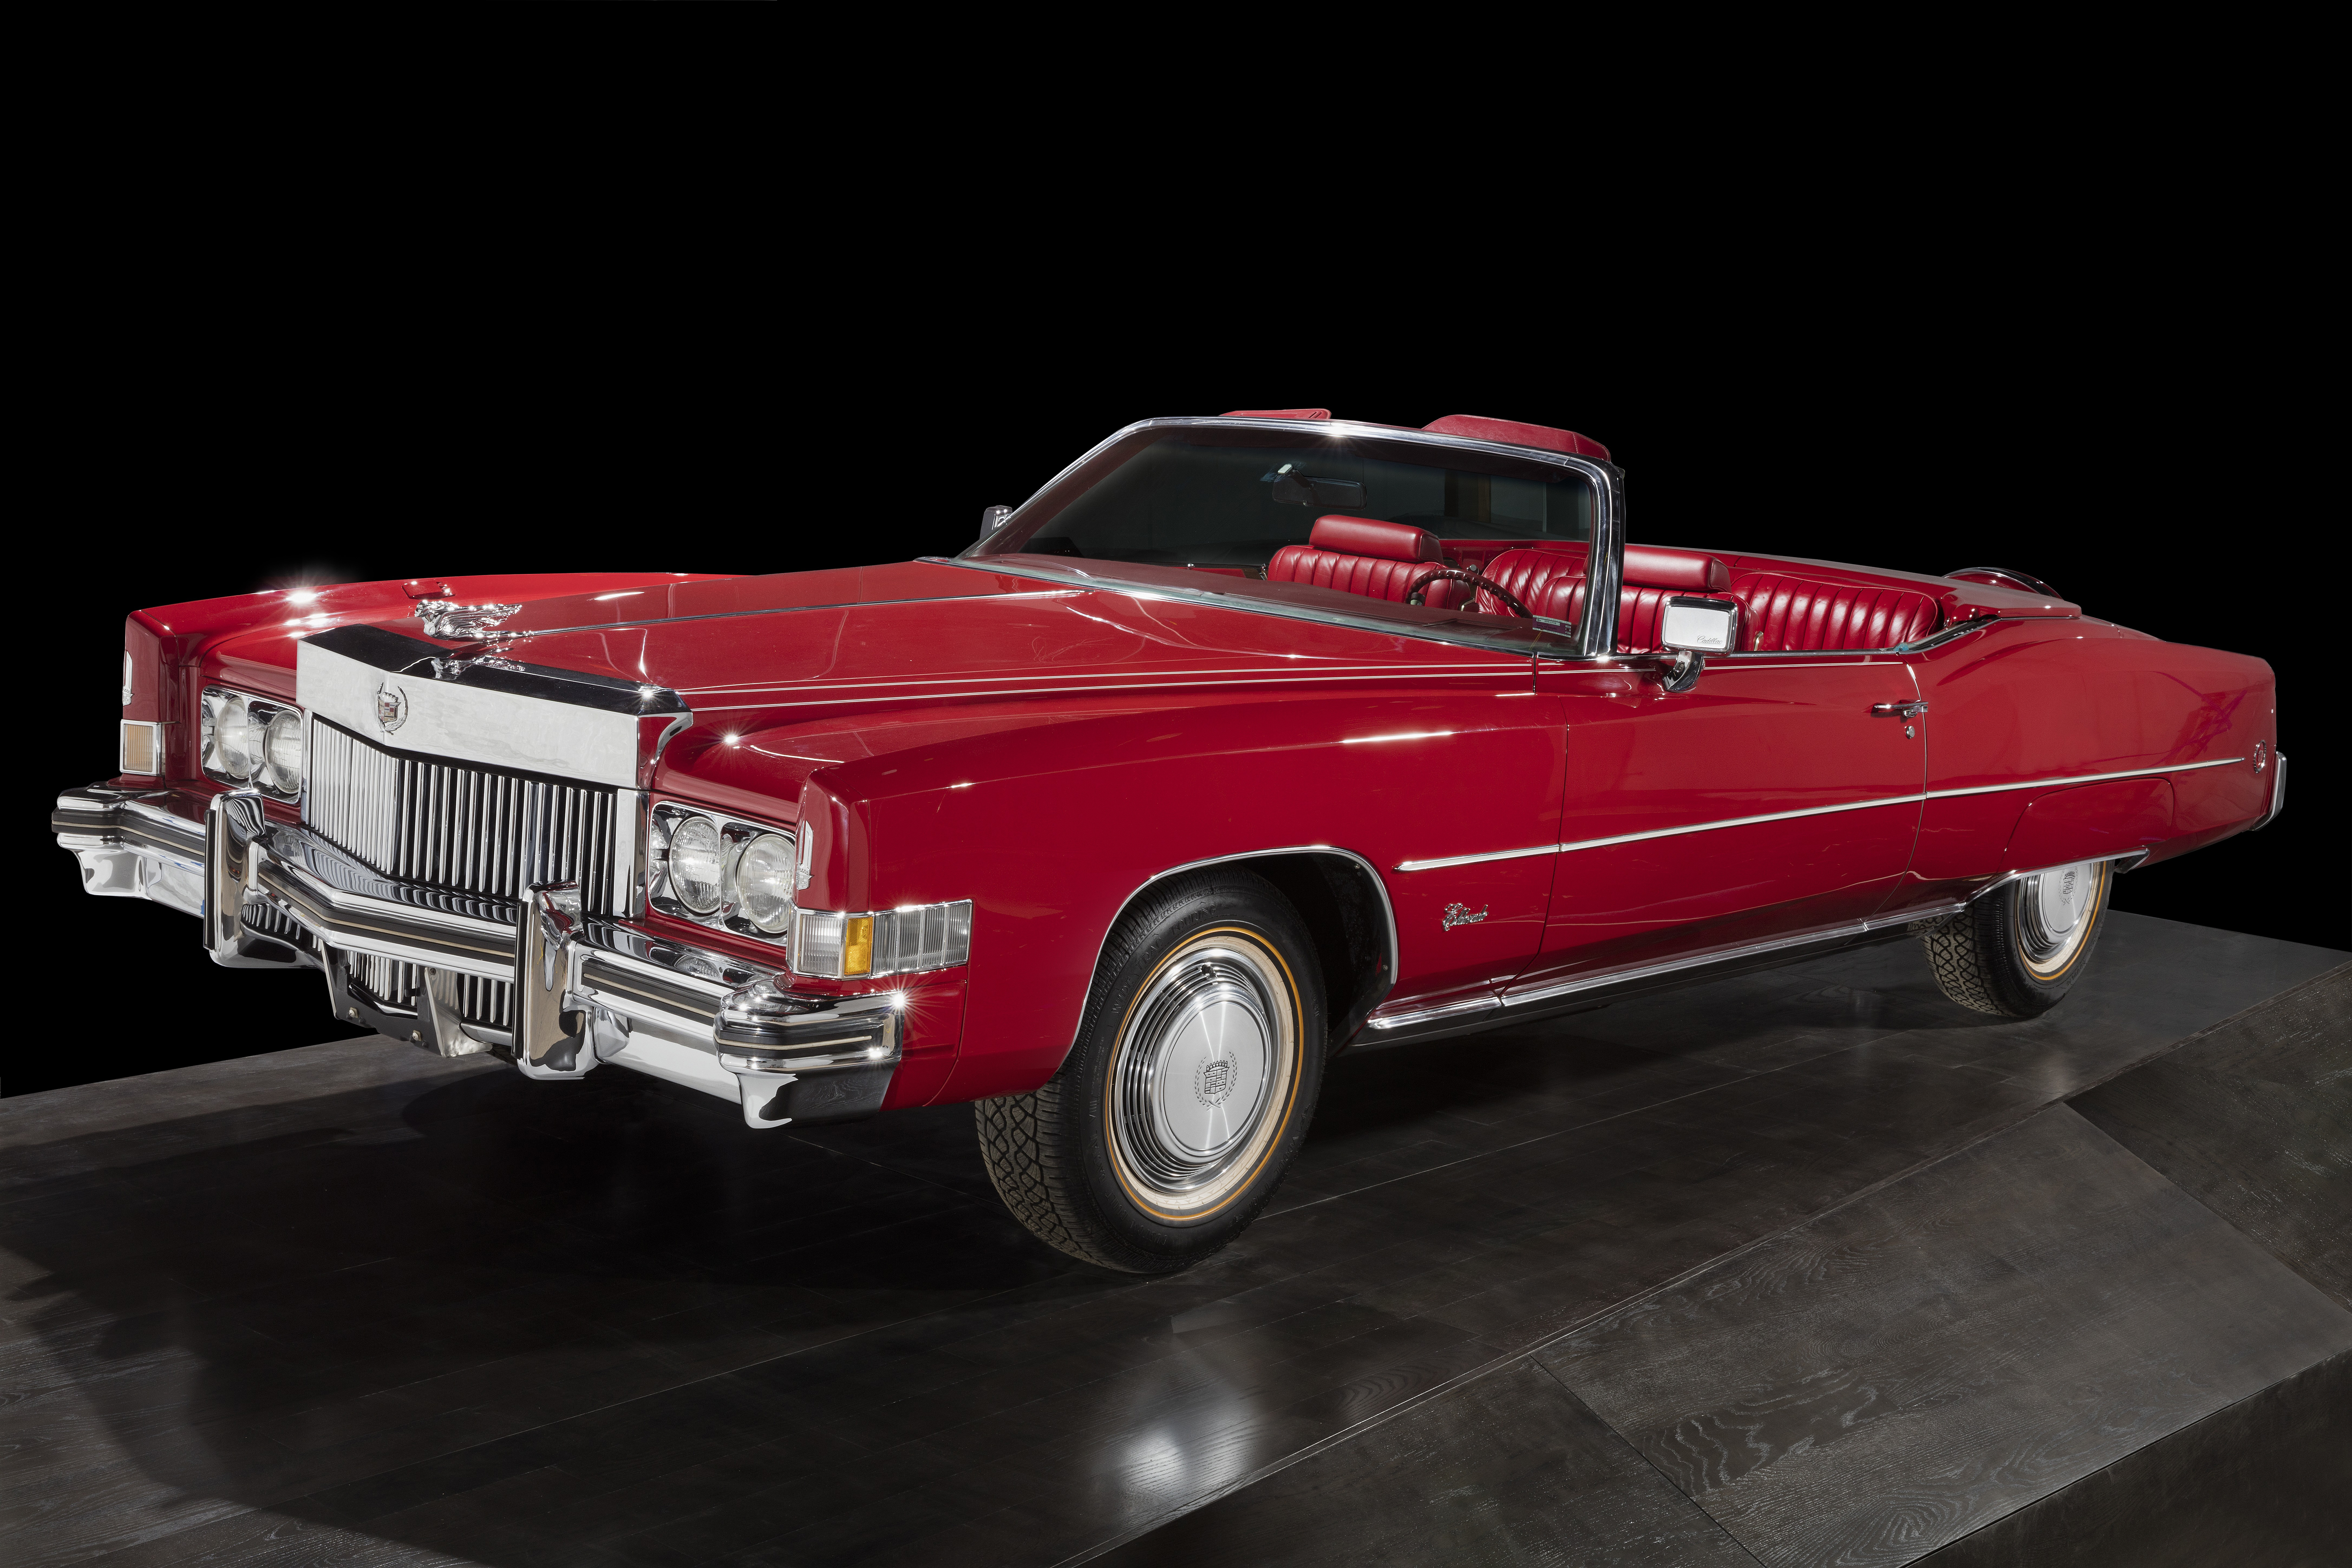 Collection Highlights: Chuck Berry's Cadillac | Newsdesk